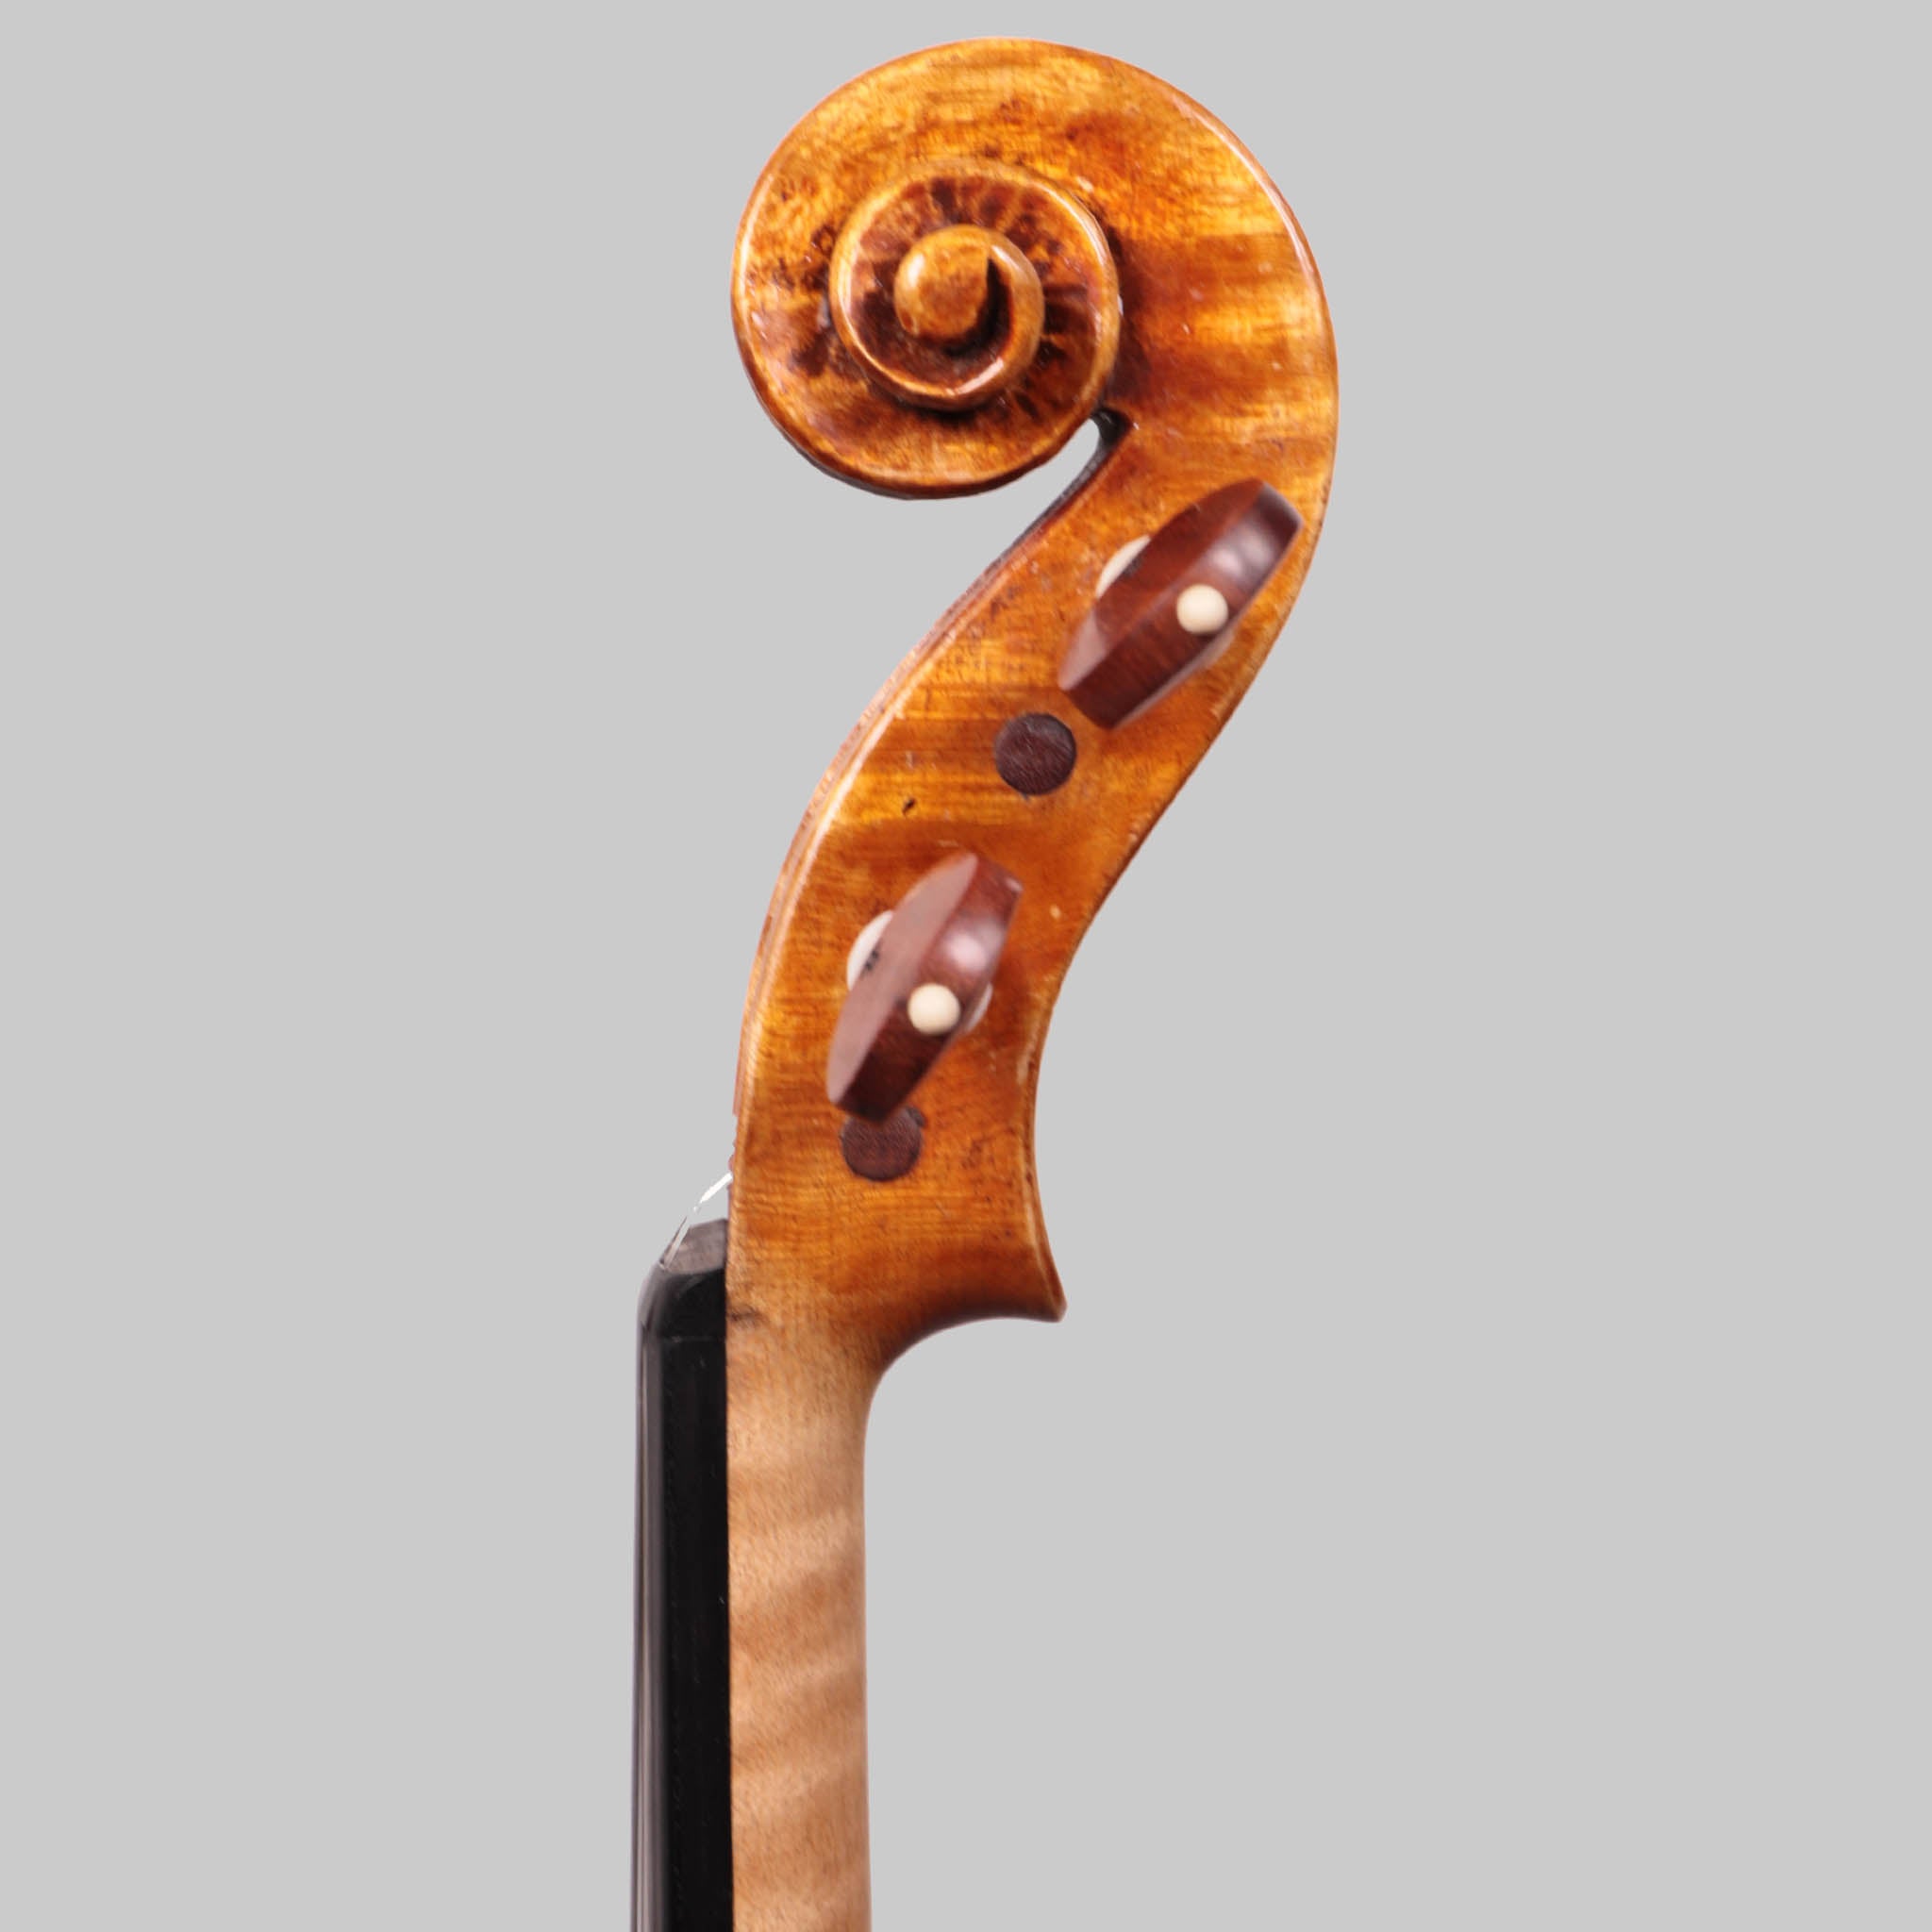 Hristo Todorov Cremona 2016 Violin